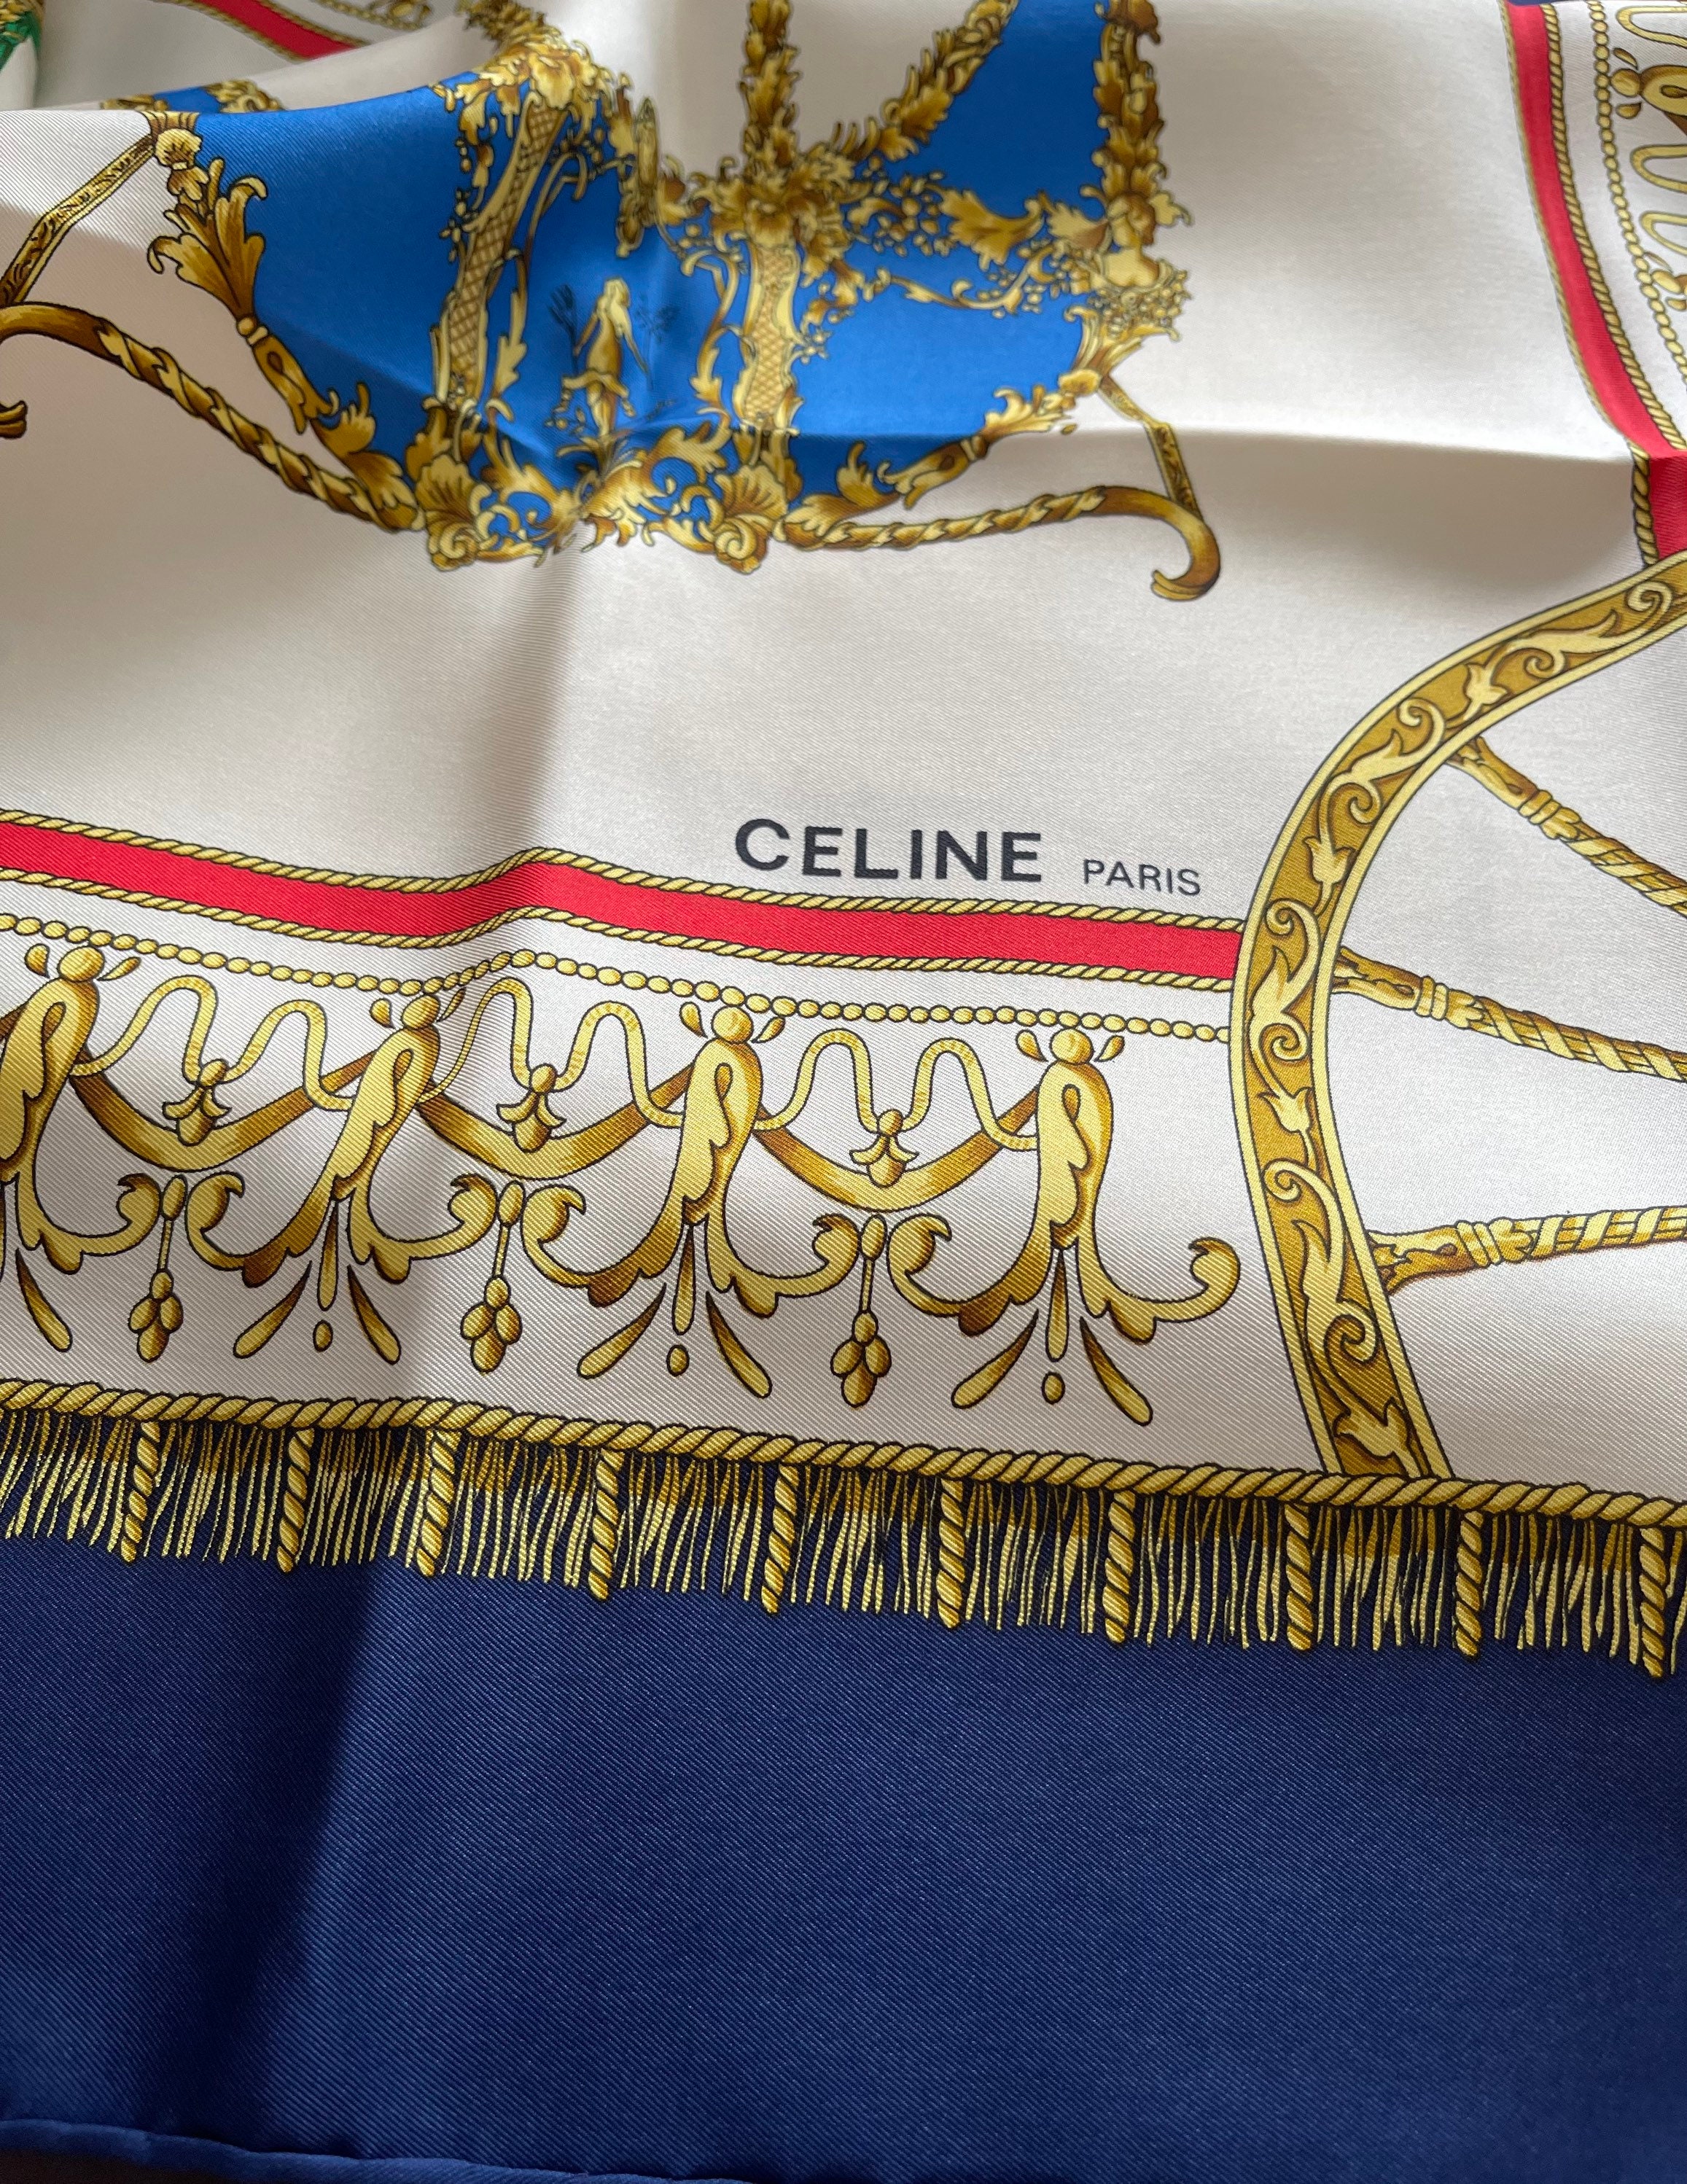 Celine Paris Vintage Silk Scarf 34 x 34 inches | Etsy